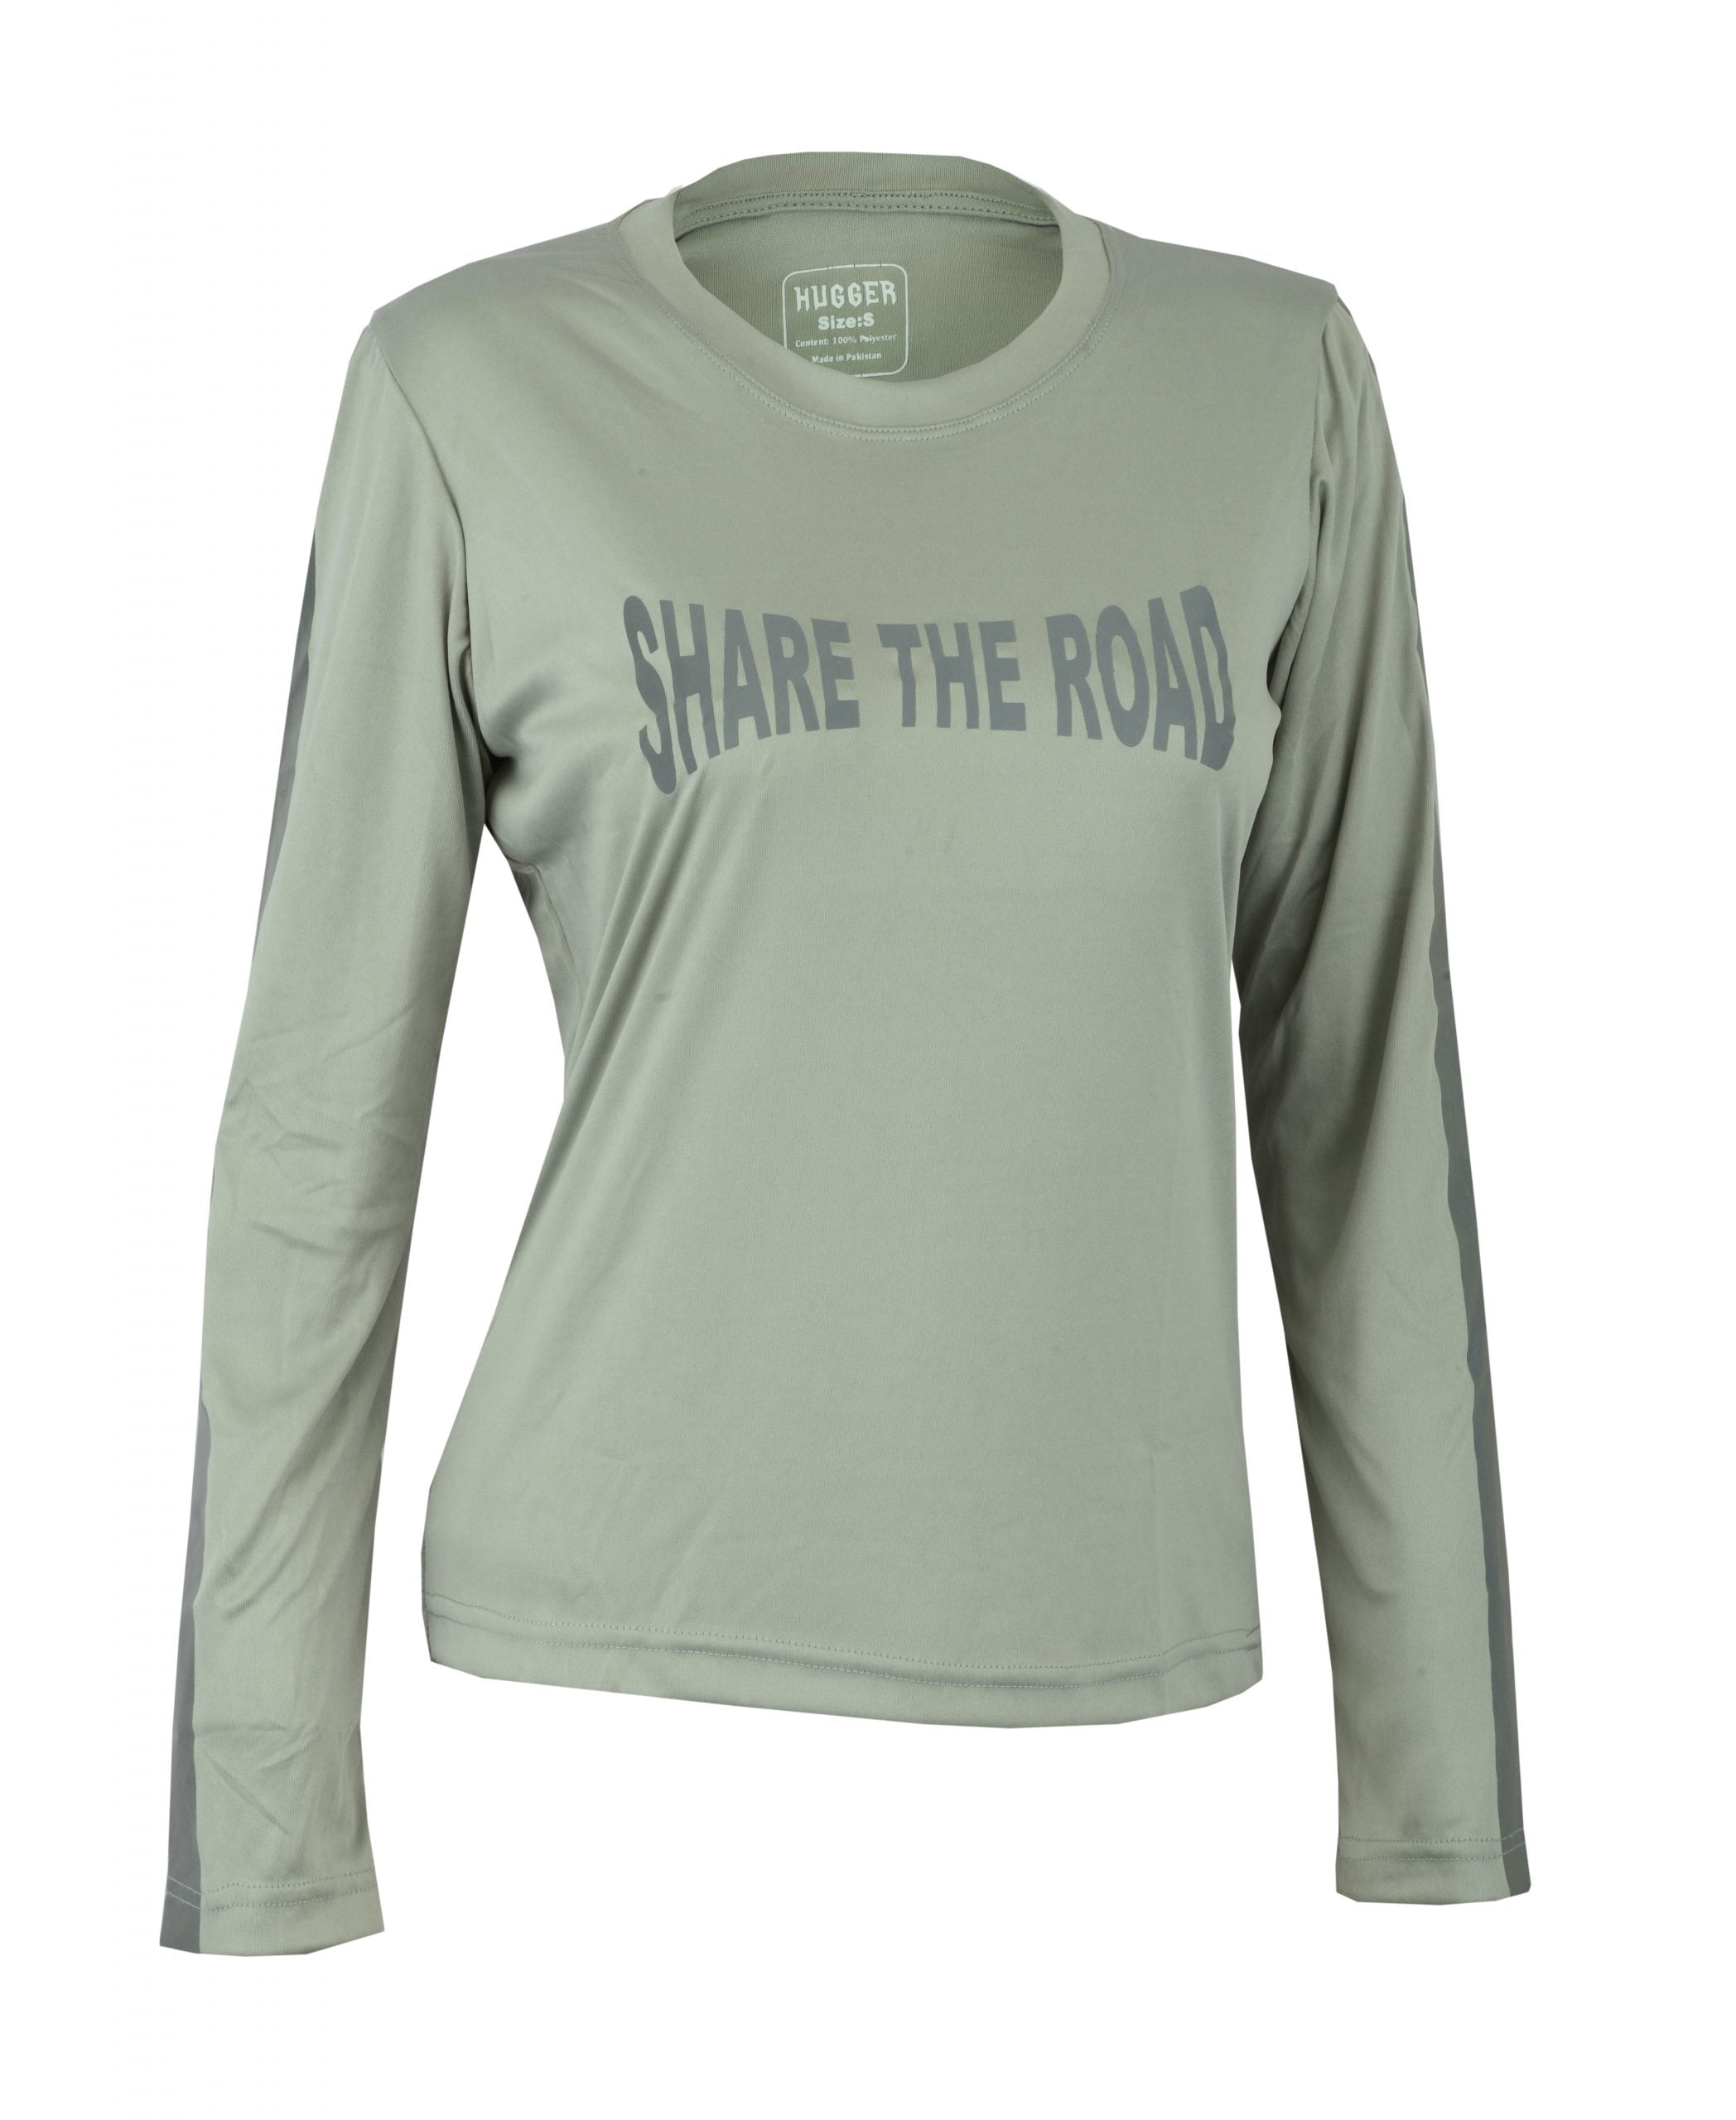 Women's Reflective Shirt -Share the Road-Grey